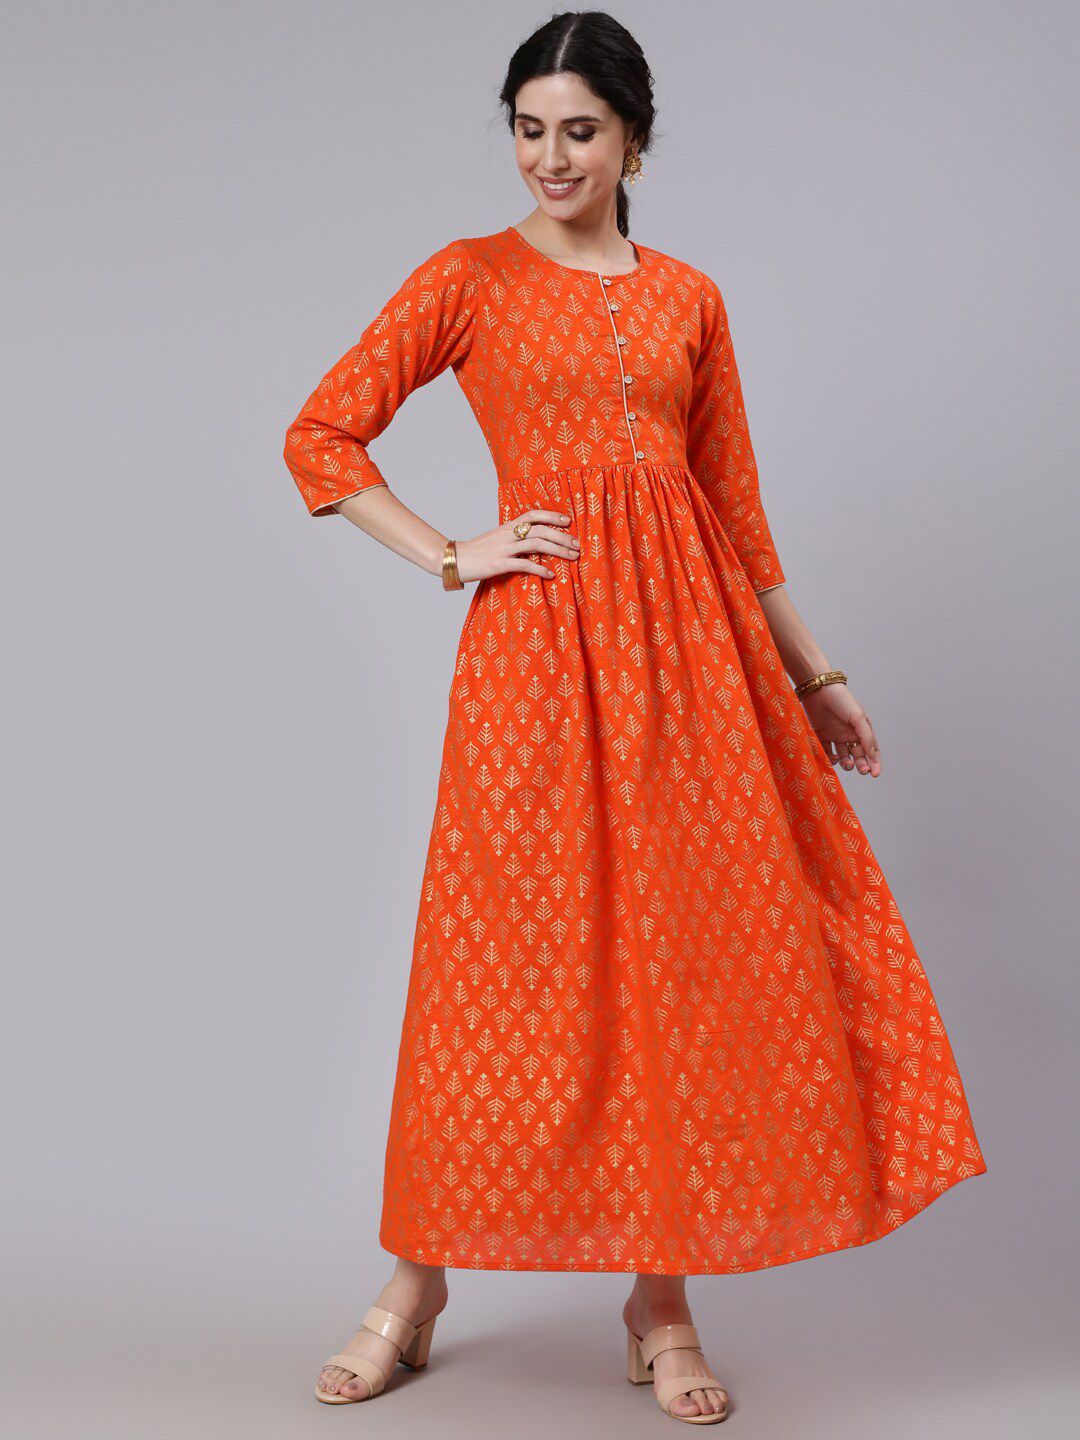 Nayo Orange Ethnic Motifs Maxi Dress Price in India